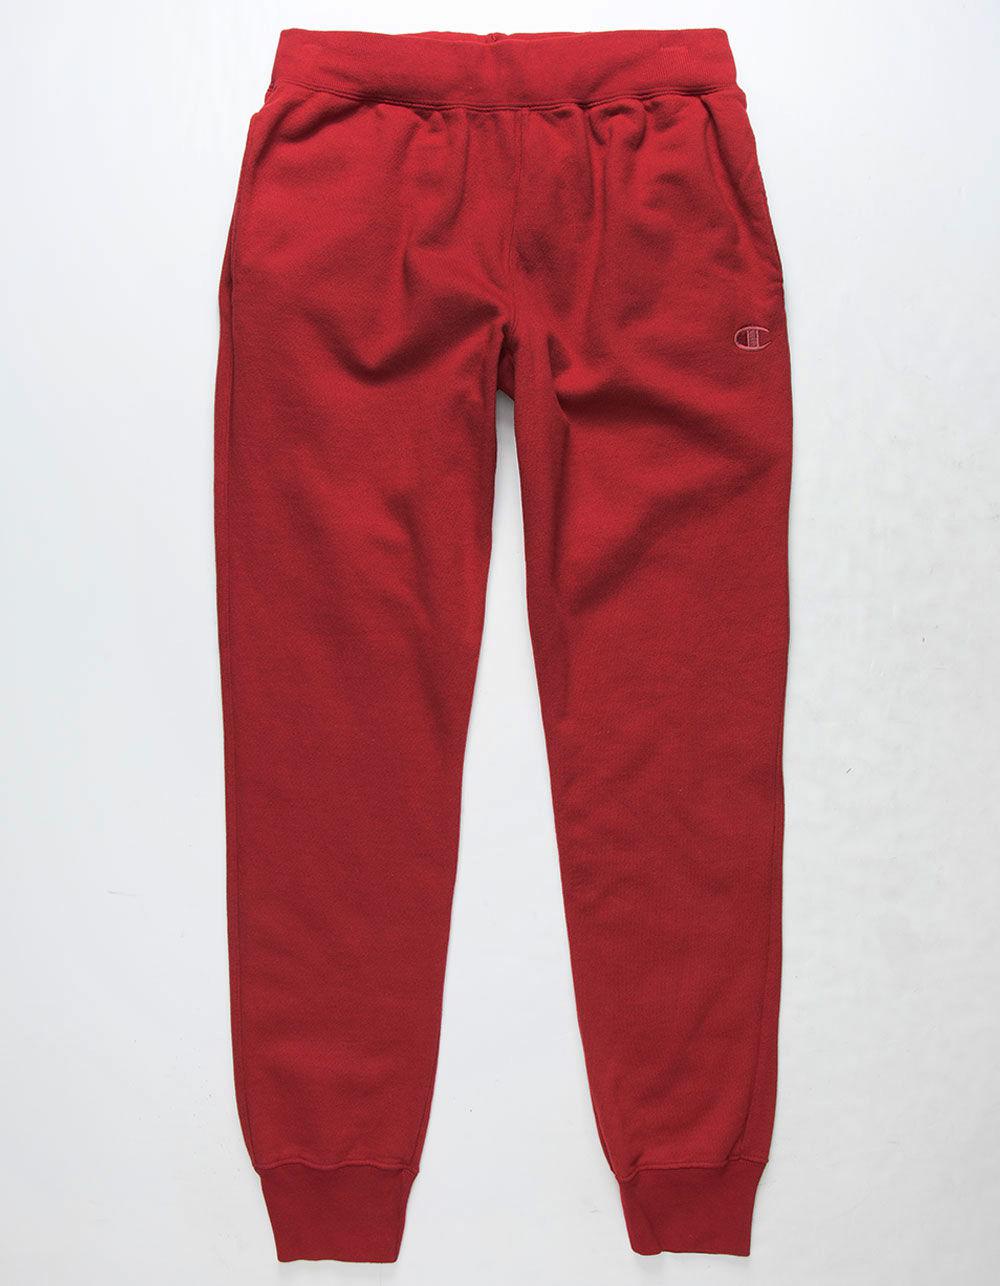 red champion jogging pants